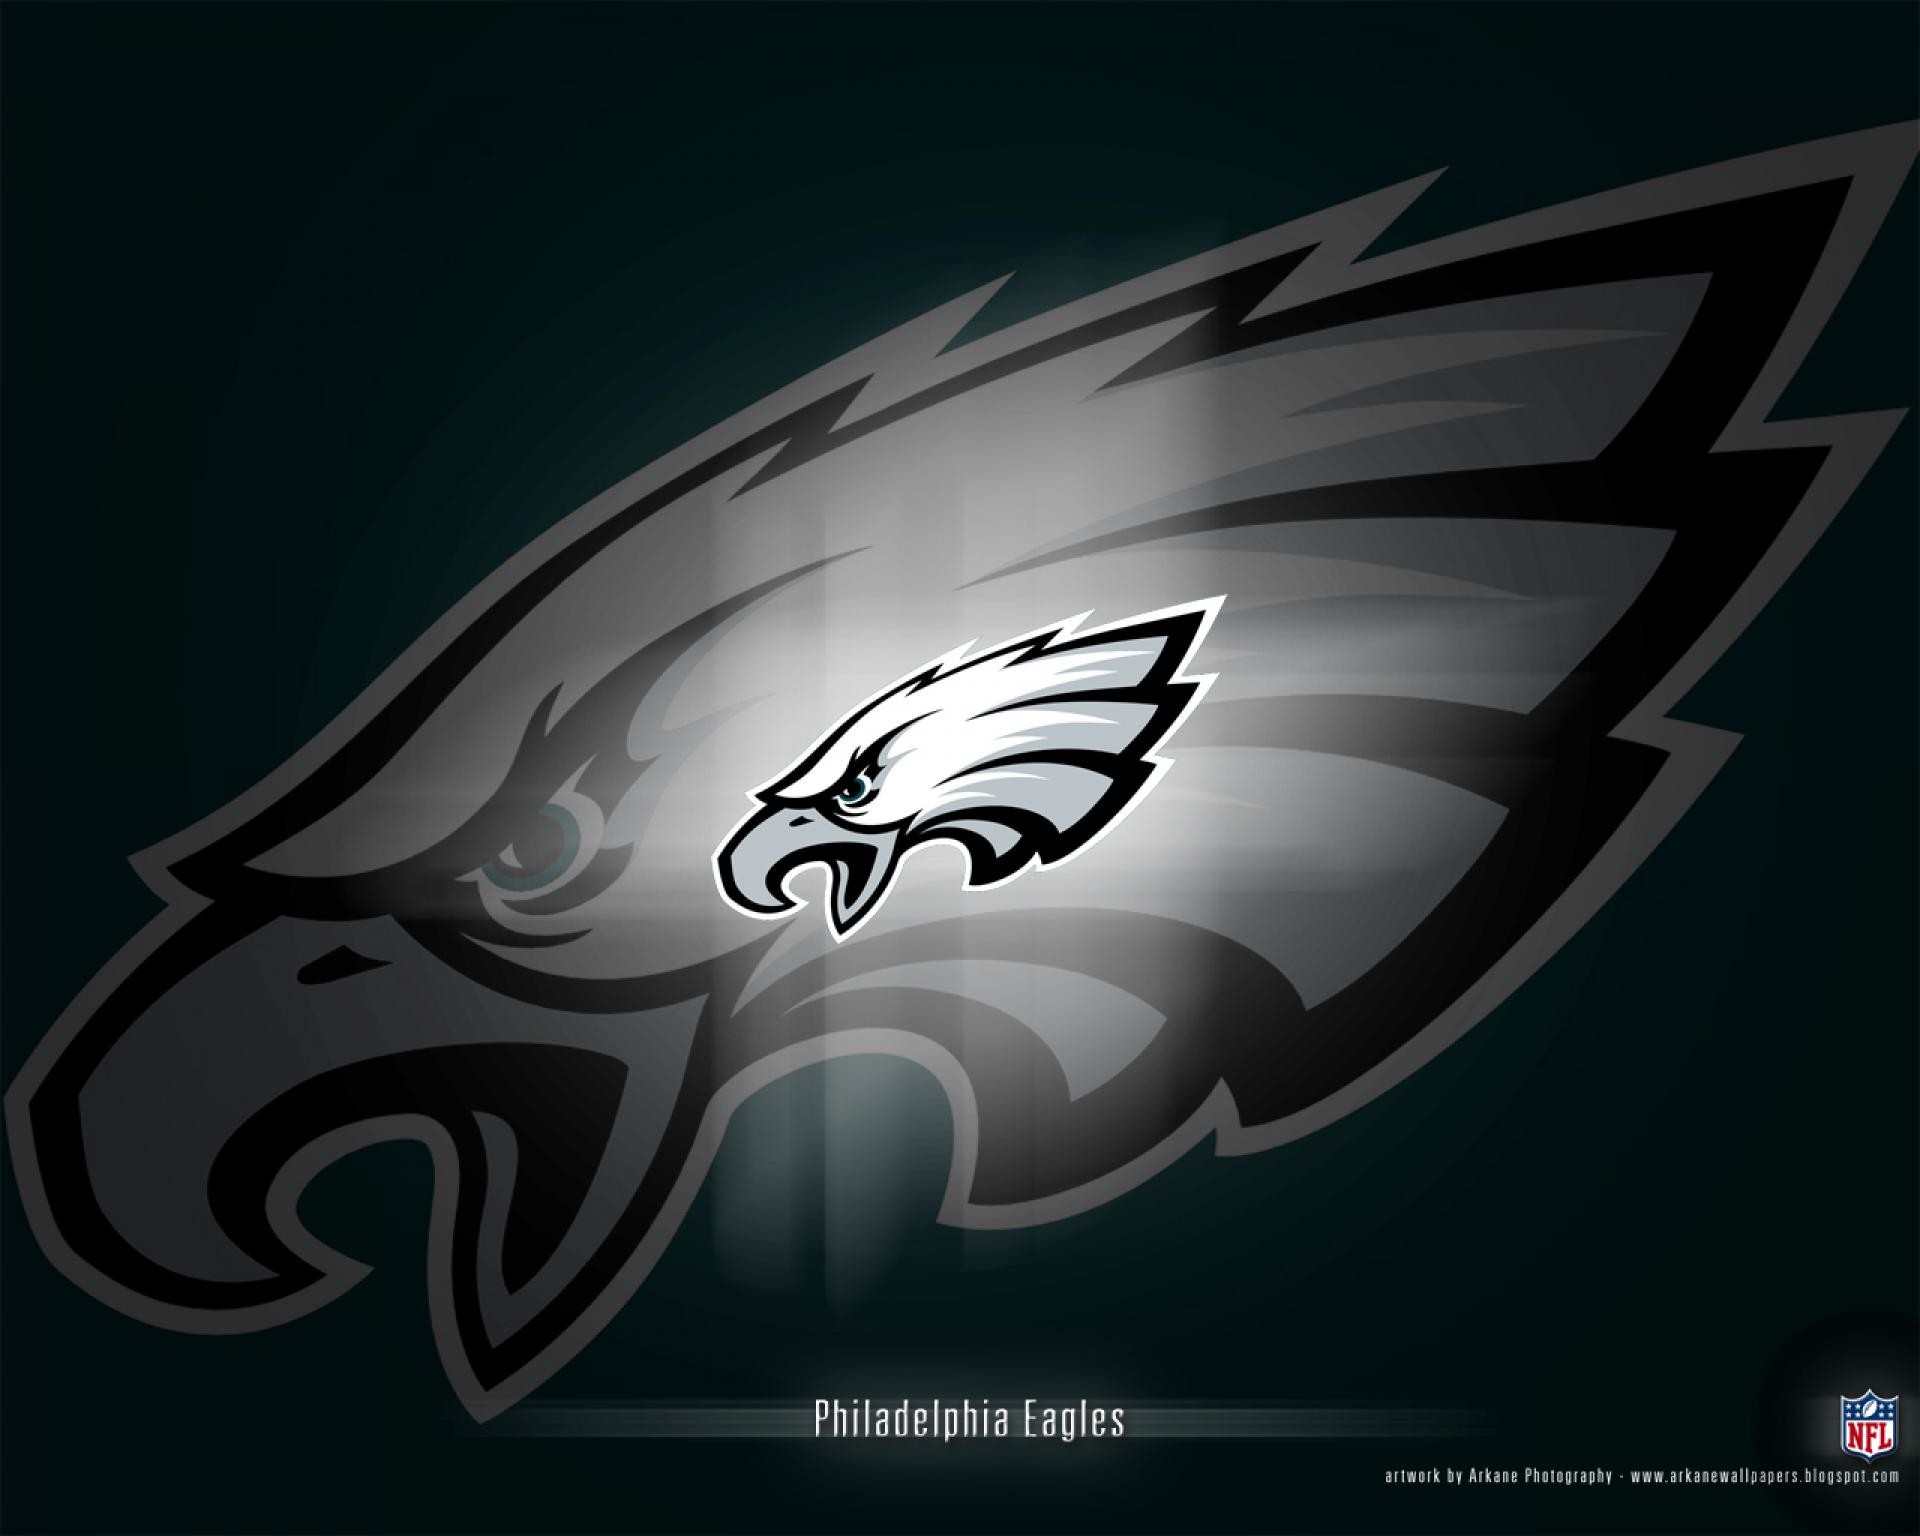 Philadelphia Eagles Live Wallpaper (66+